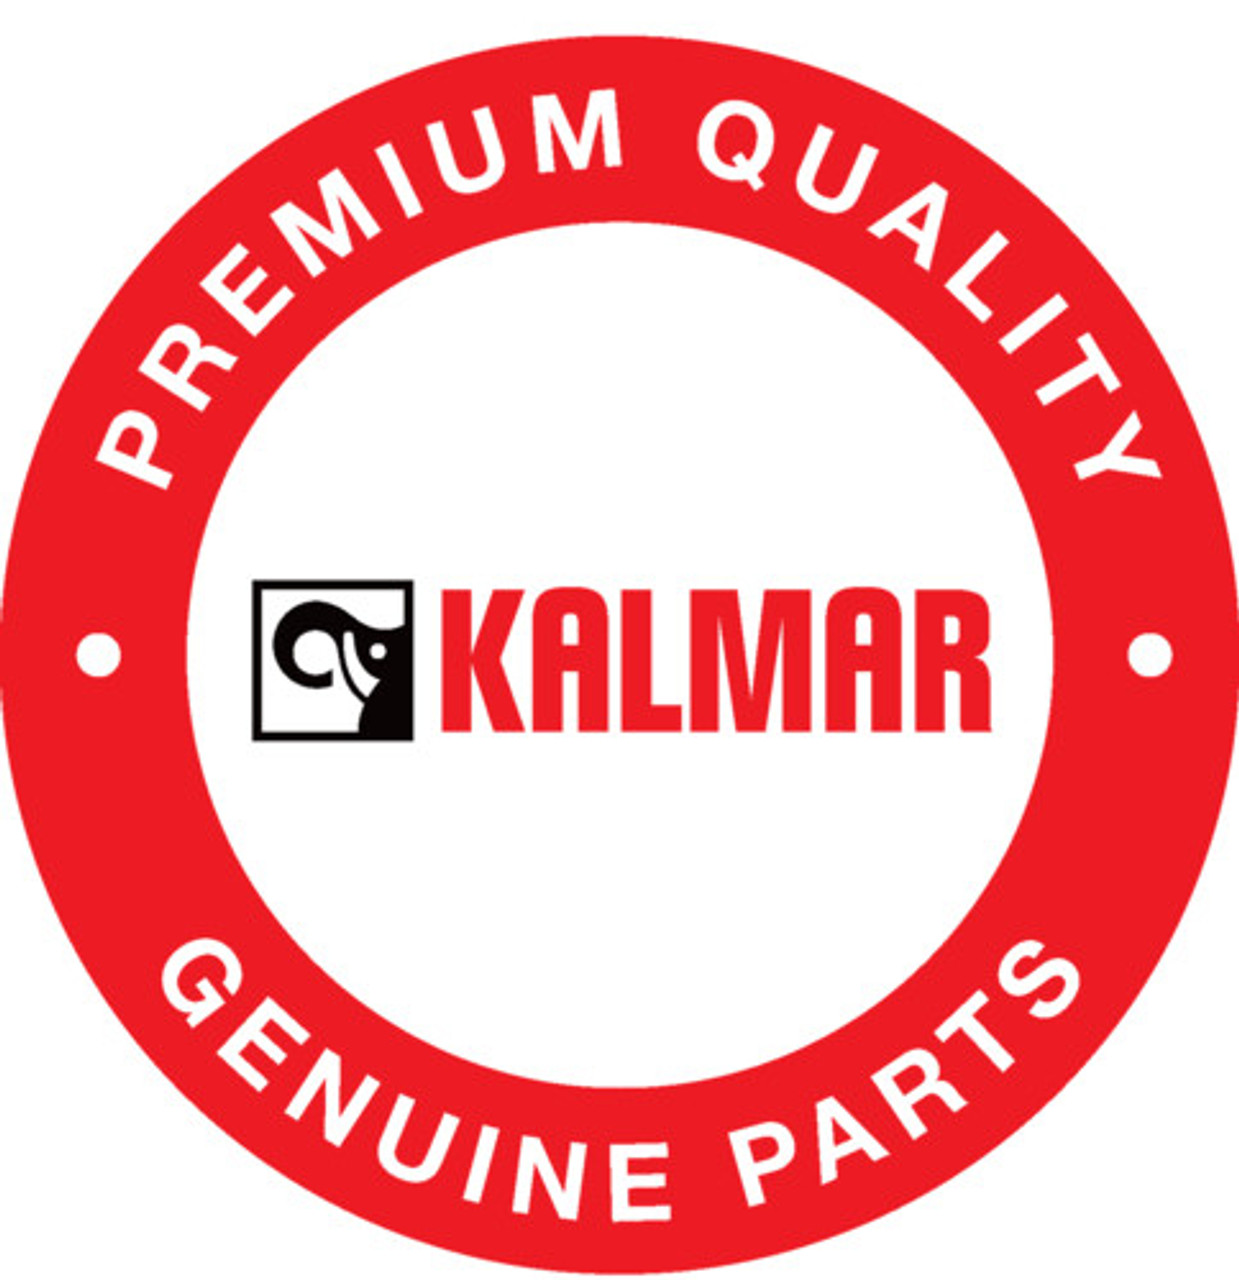 A61744.0100: Kalmar® Non-Slip Plate, Checker Plate